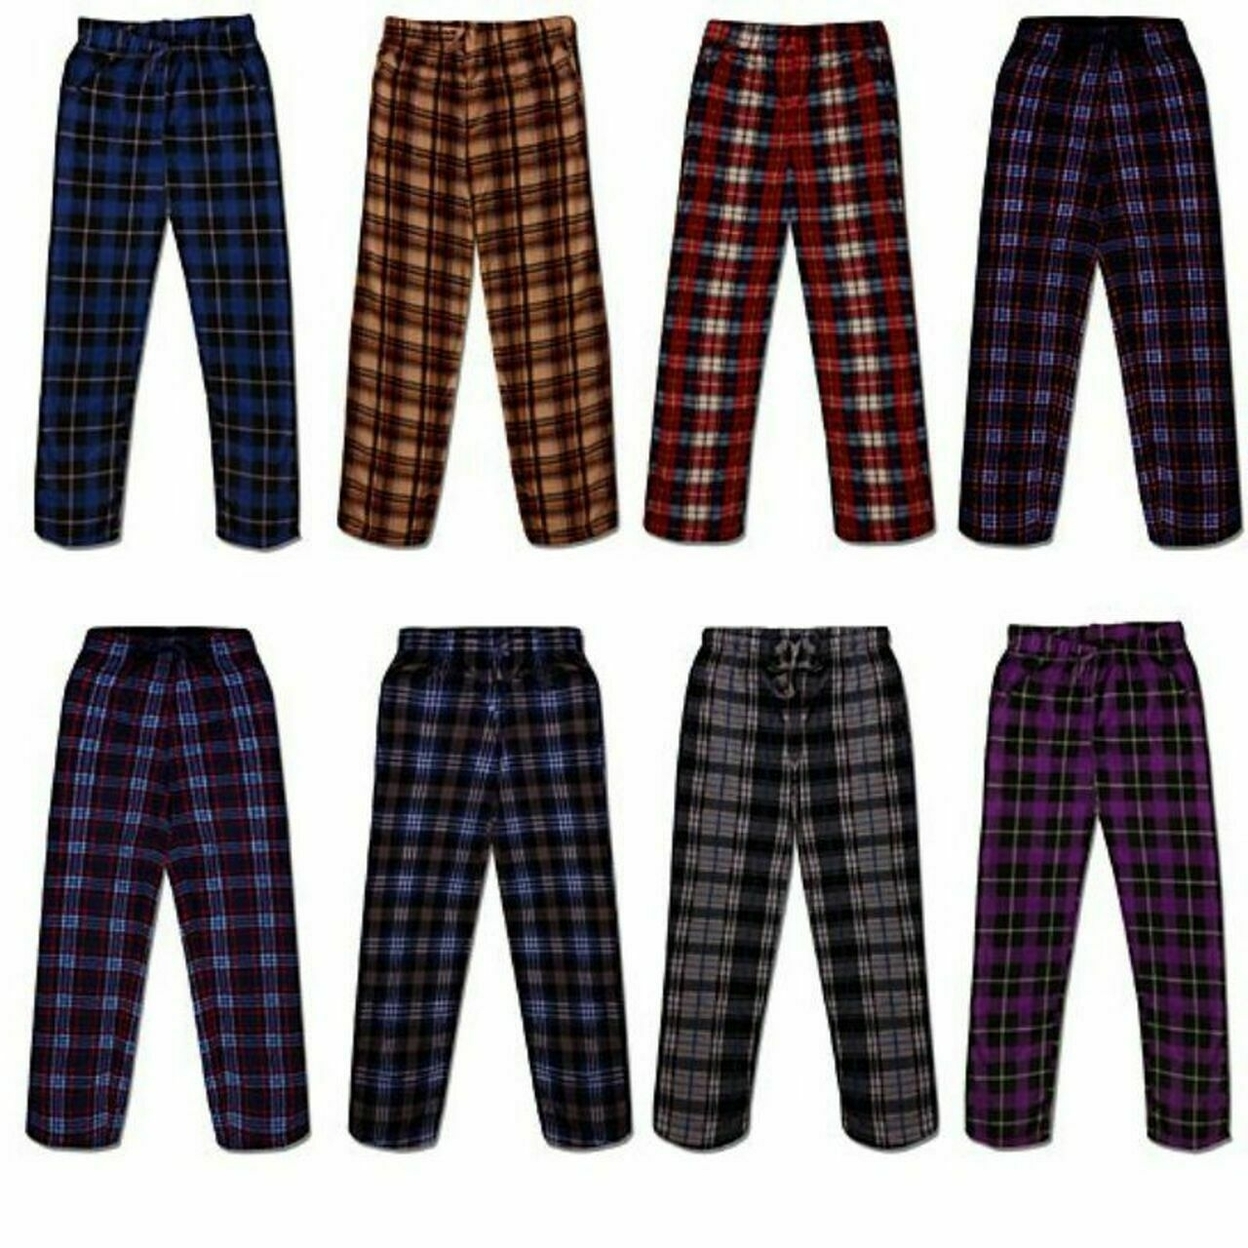 2-Pack: Men's Ultra Soft Cozy Flannel Fleece Plaid Pajama Sleep Bottom Lounge Pants - Black & Grey, Large